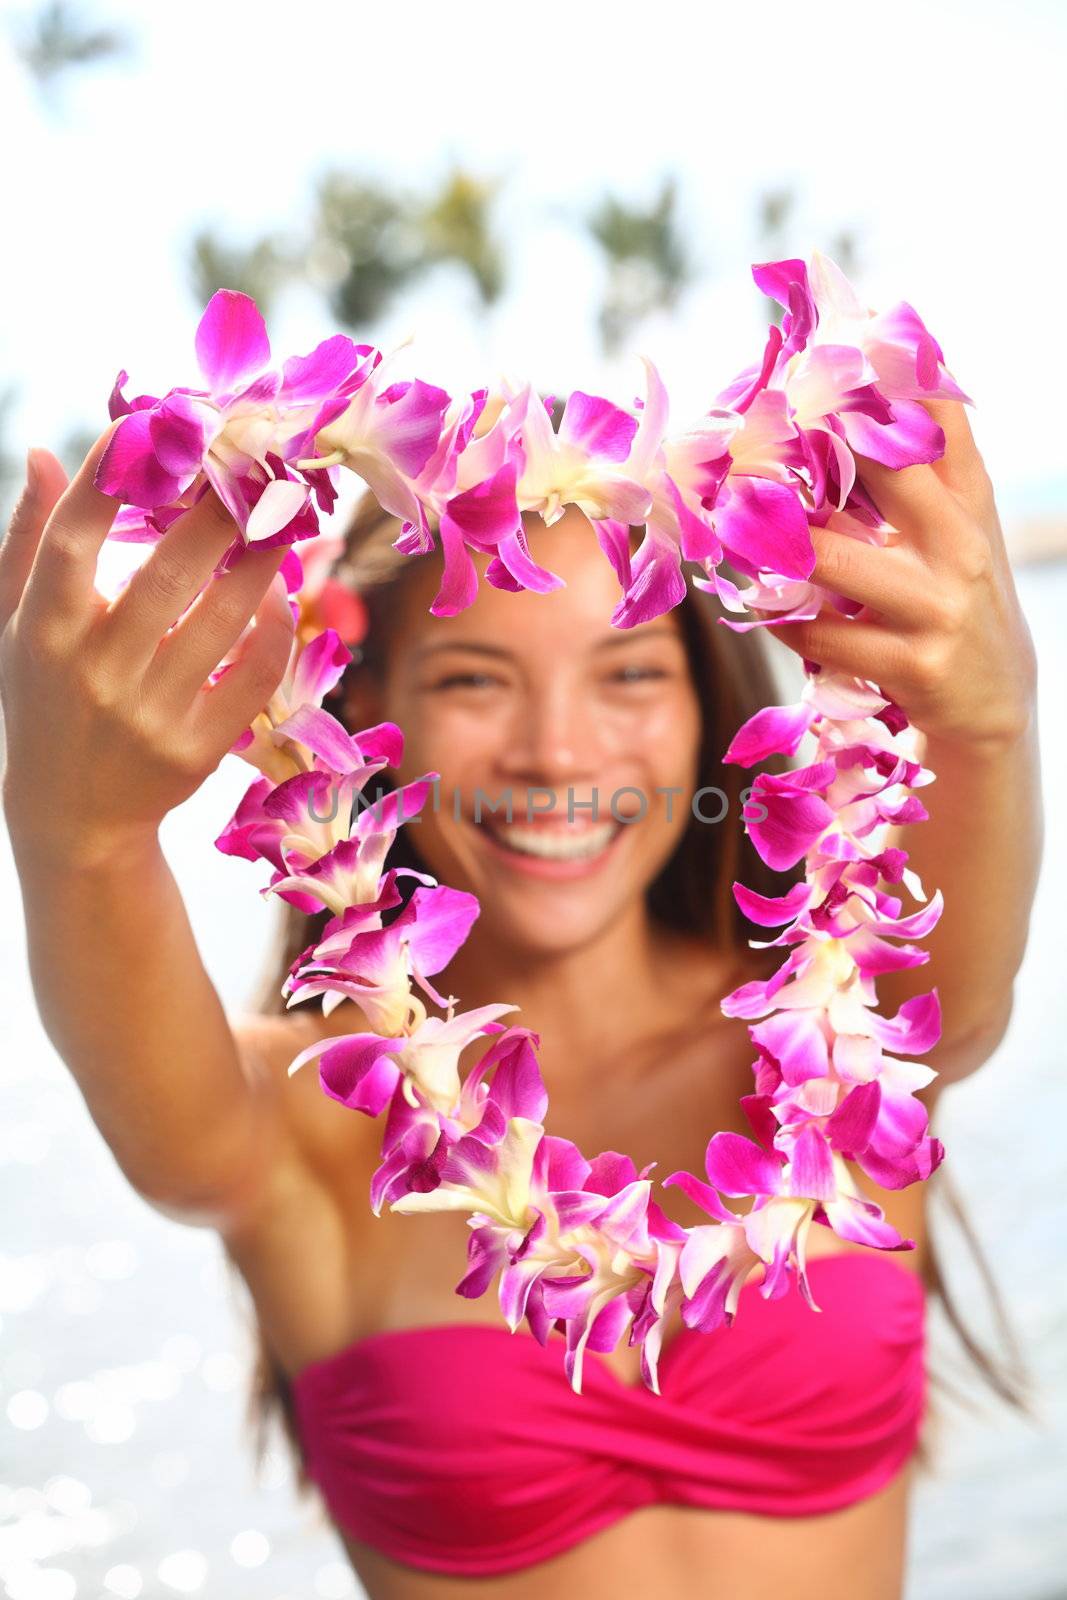 Hawaii woman showing flower lei garland by Maridav